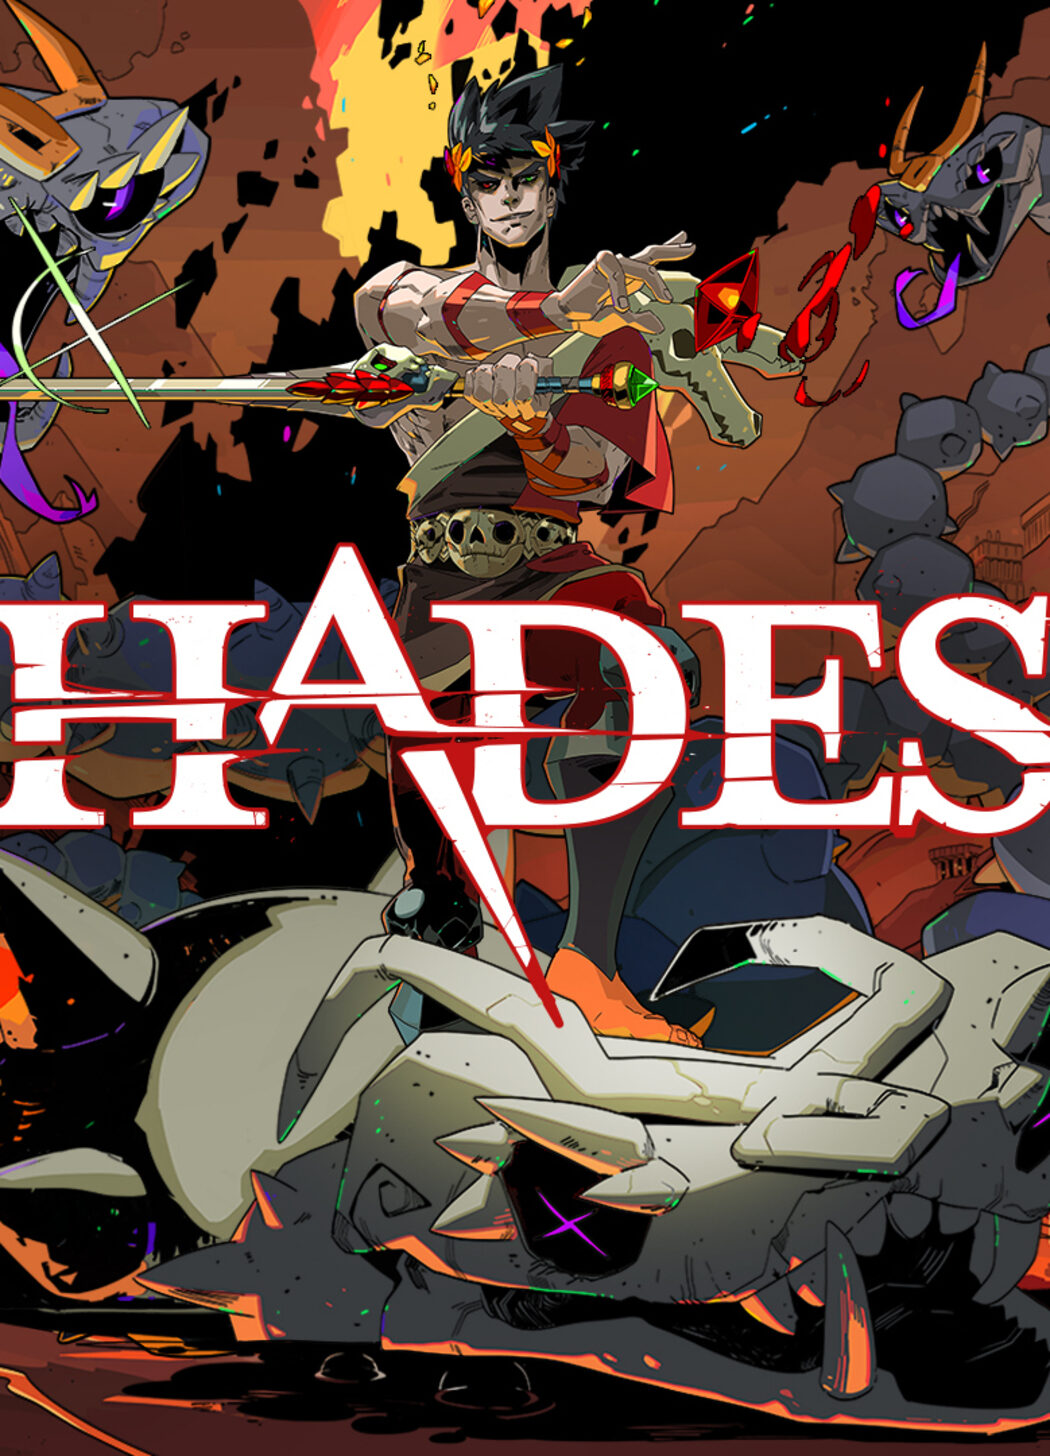 Hades (2020), Switch eShop Game